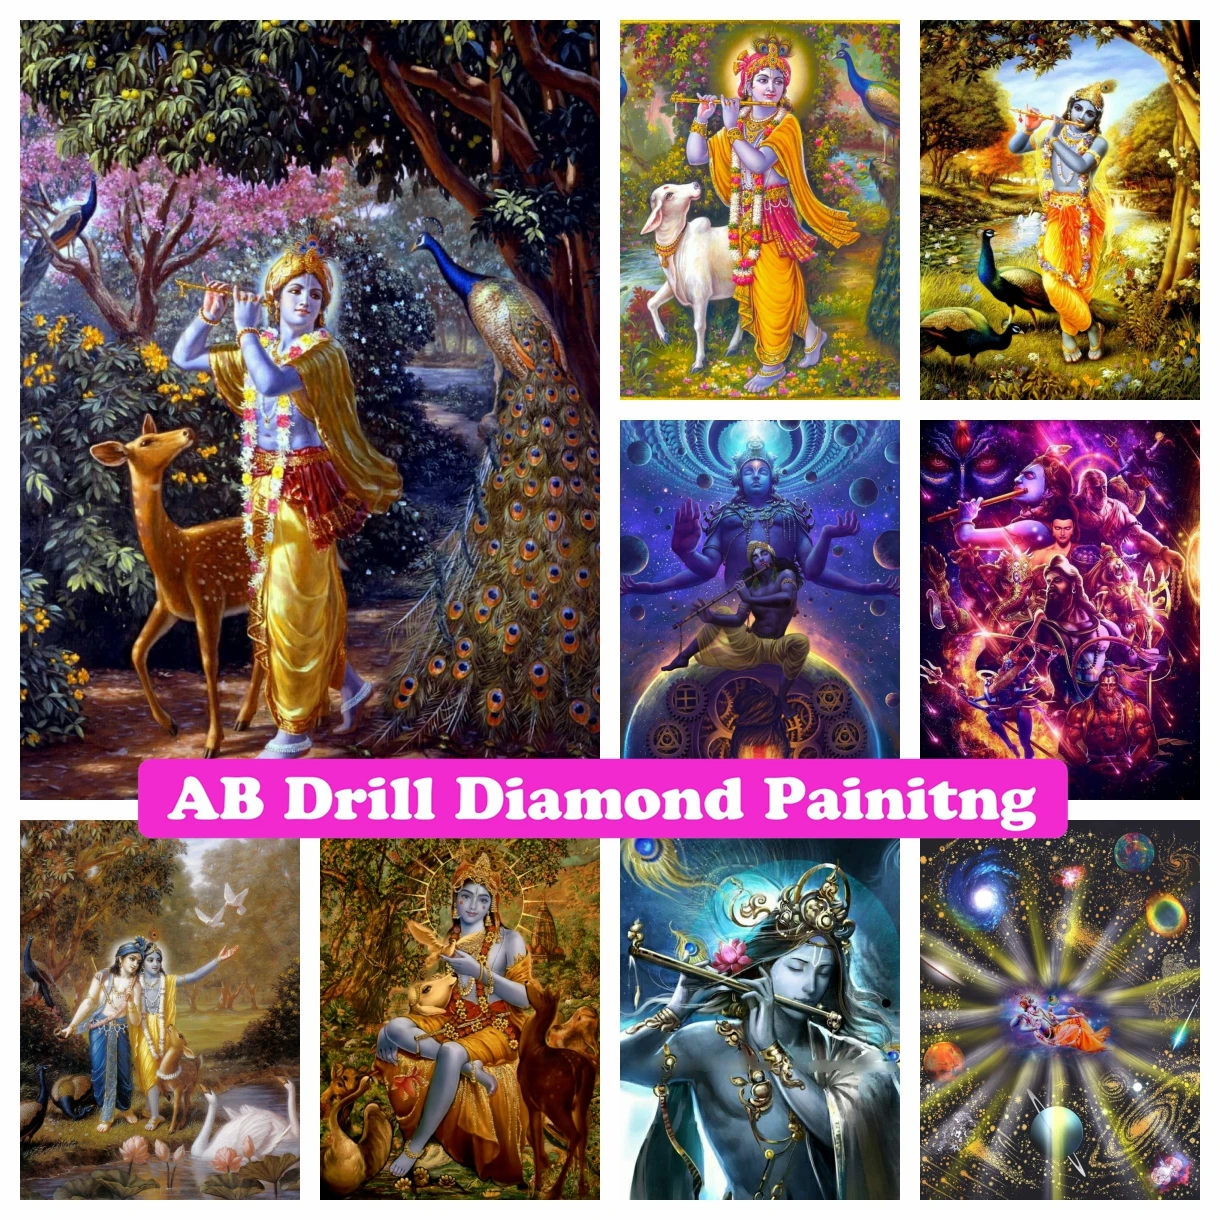 

Lord Krishna 5D DIY AB Drills Diamond Painting Cross Stitch Religious Hindu Artwork Embroidery Picture Mosaic Bedroom Decor